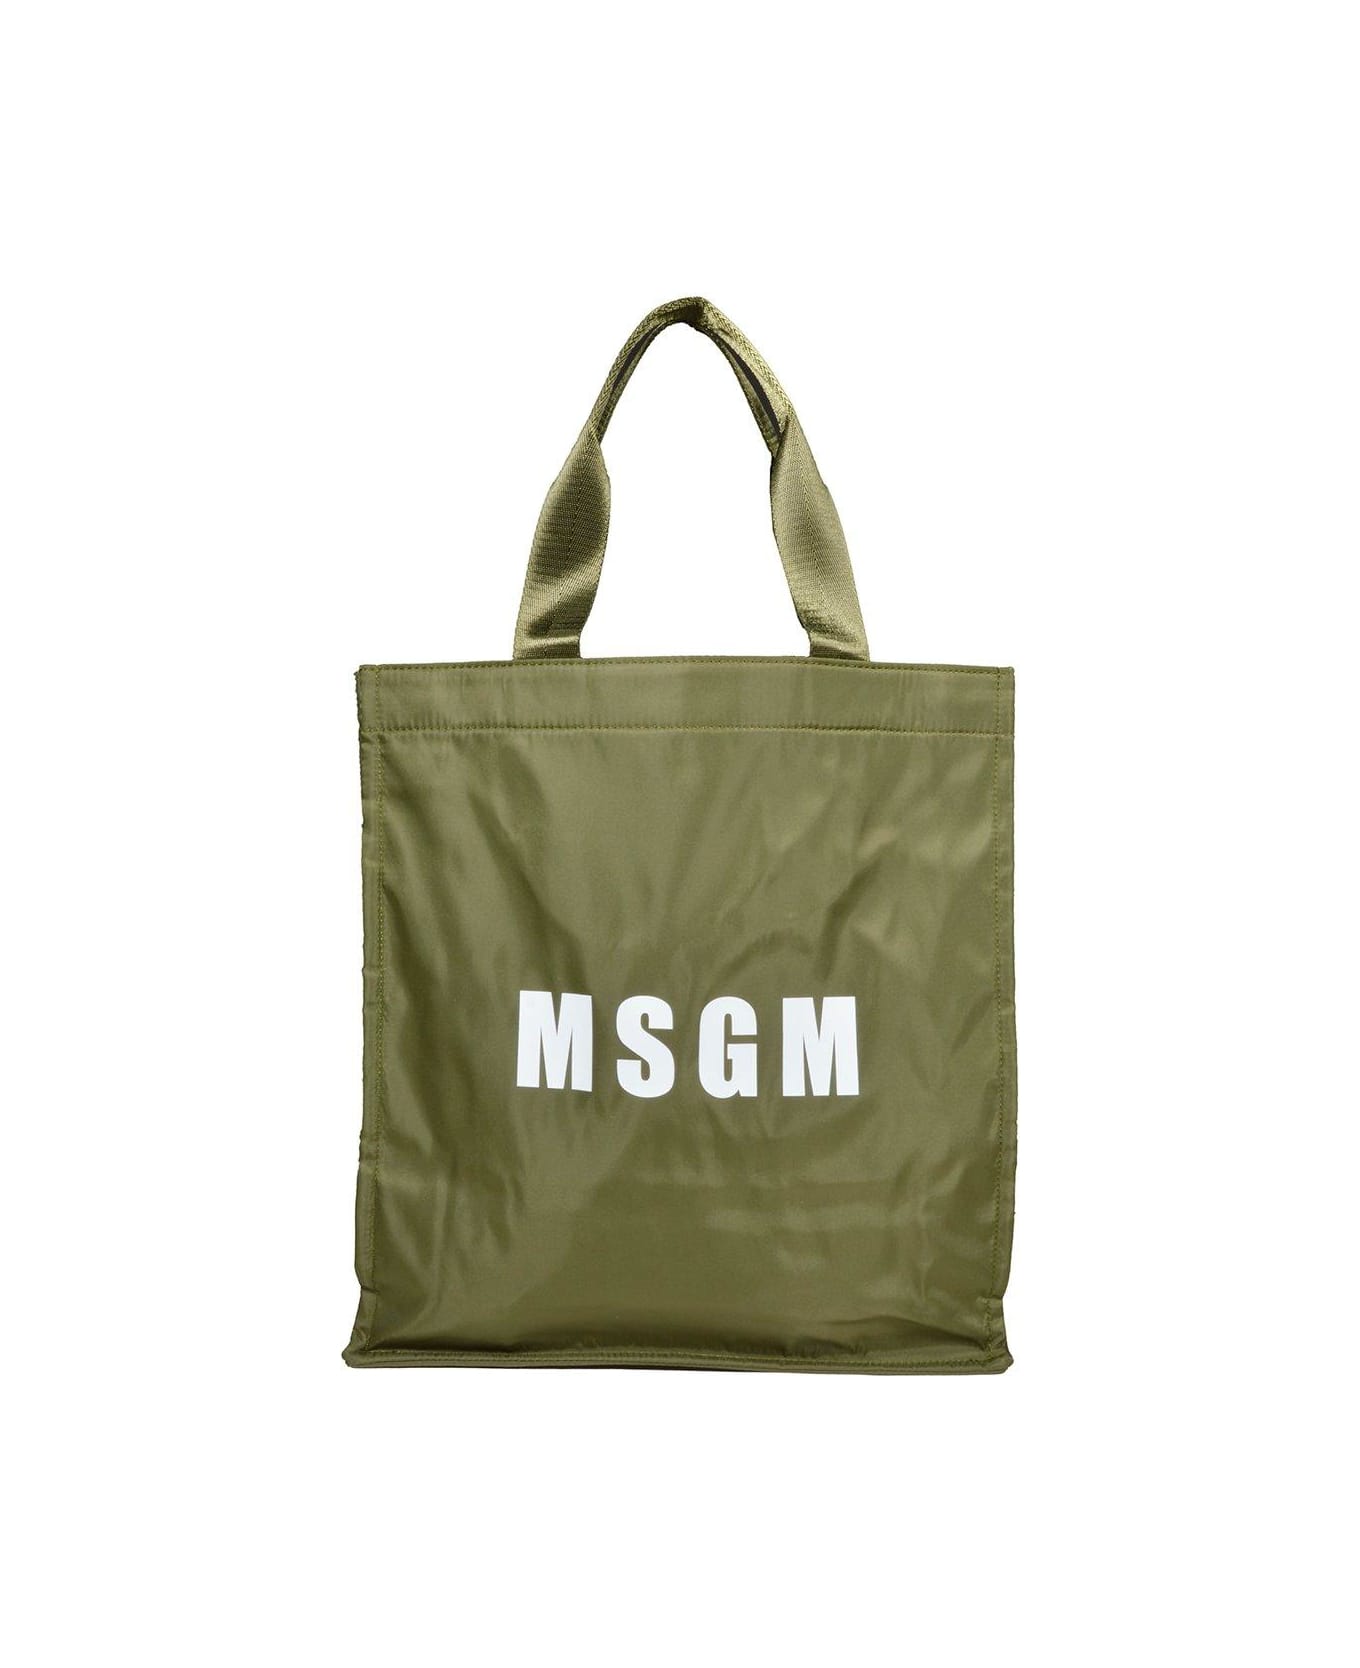 MSGM Logo Printed Top Handle Bag - Verde militare トートバッグ